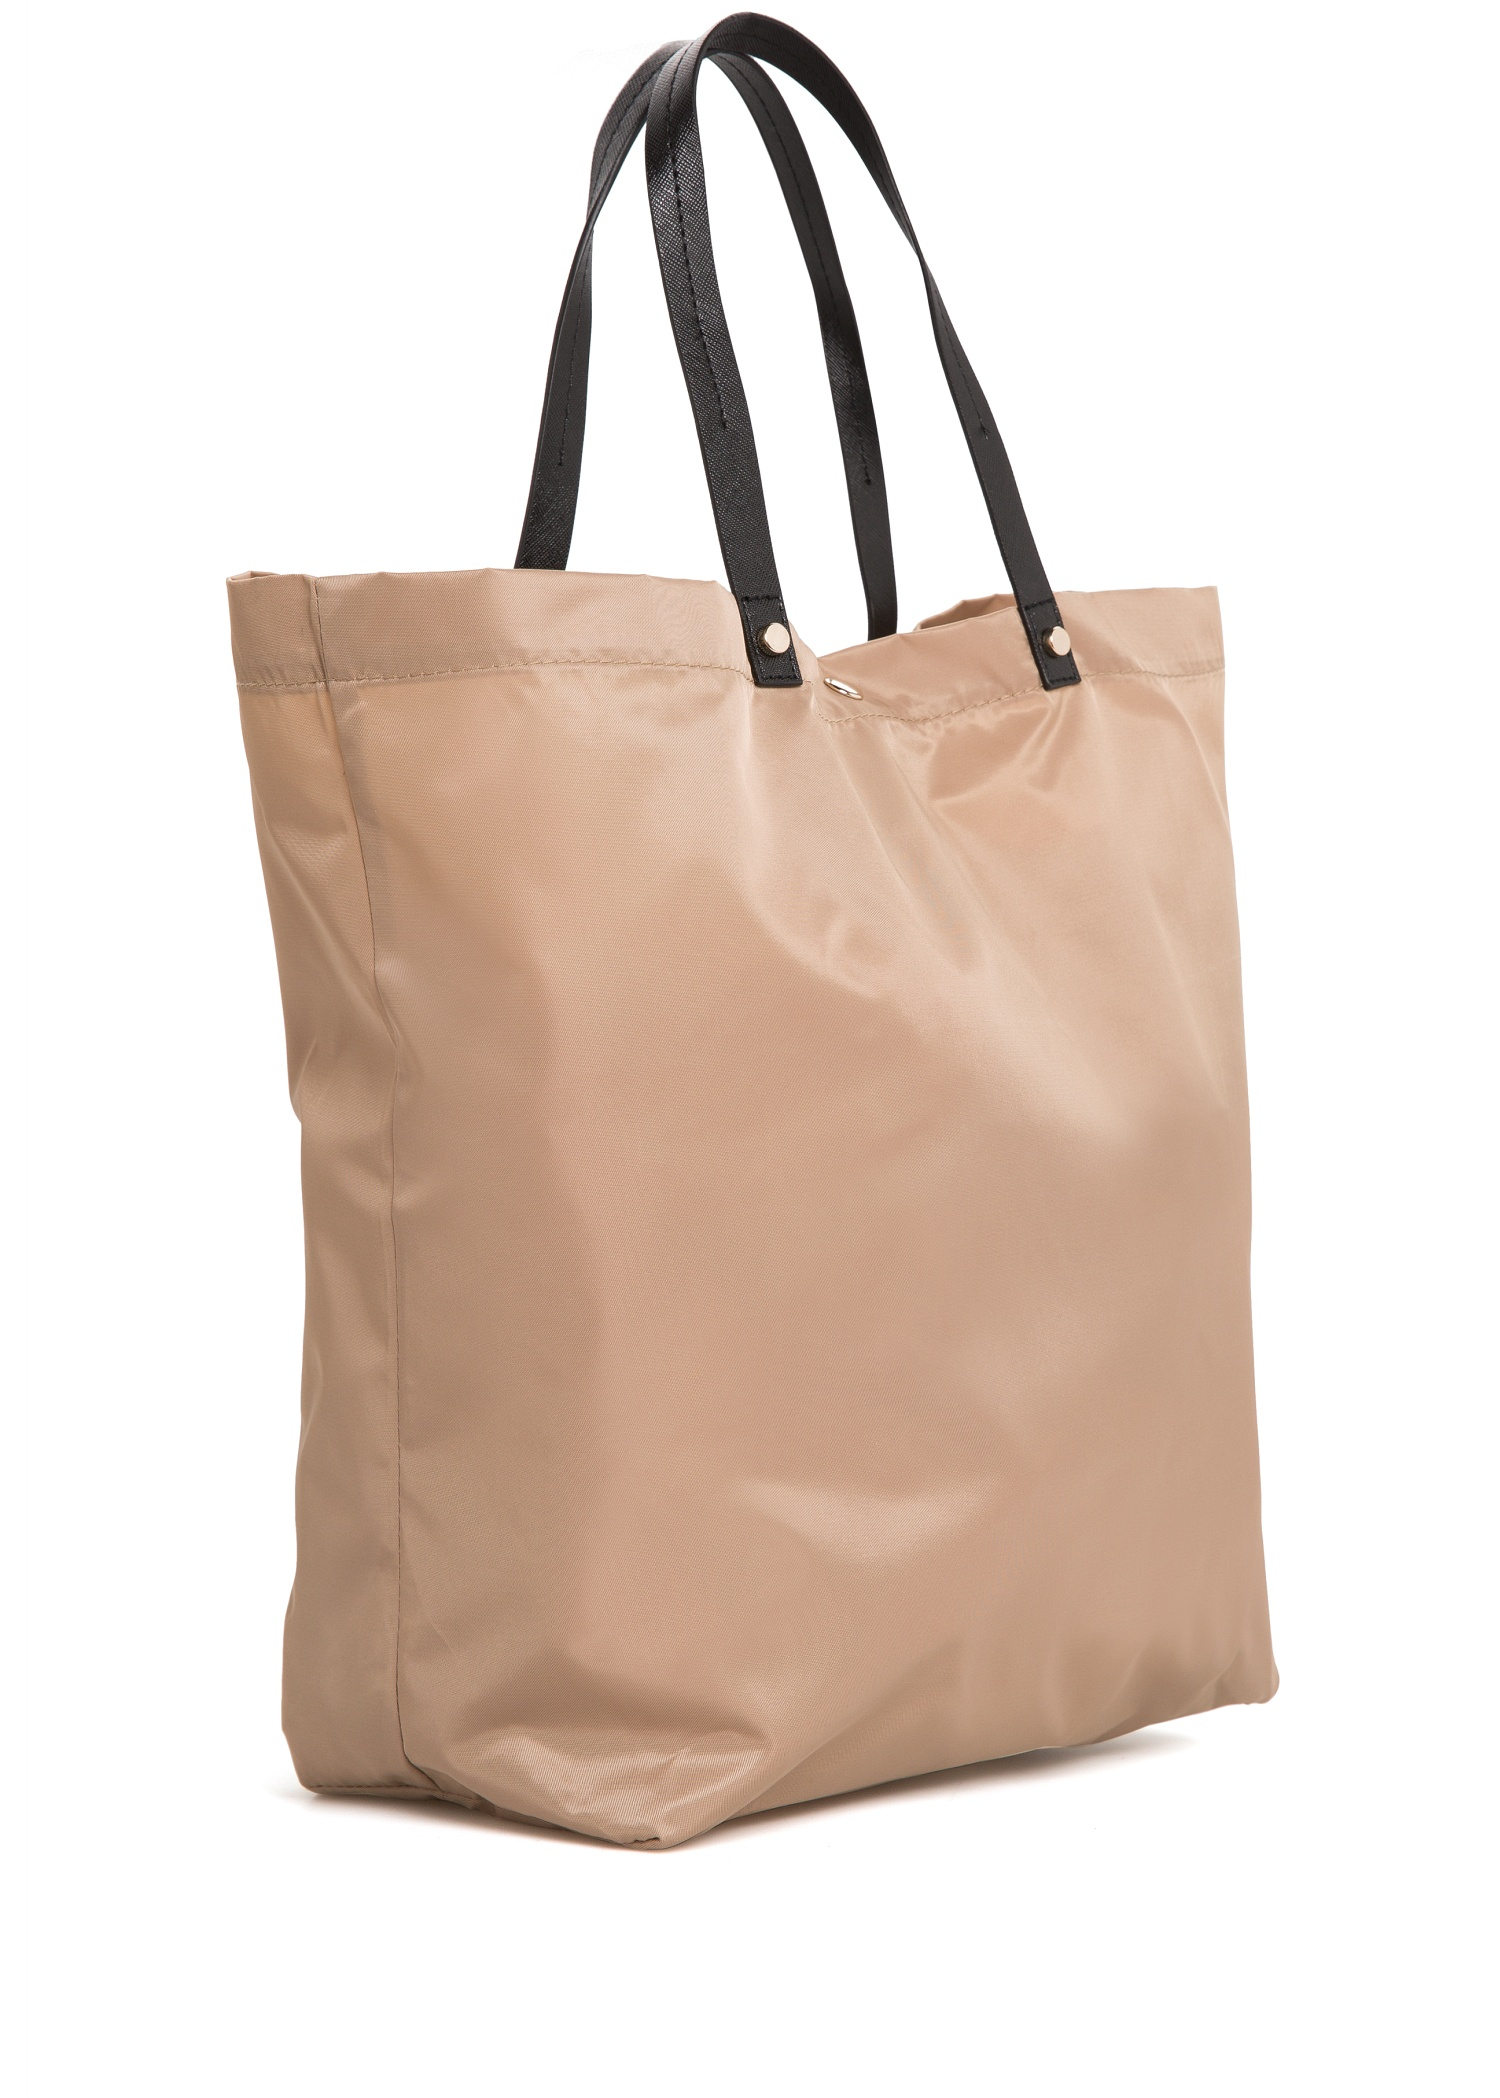 Lyst - Mango Nylon Shopper Bag in Natural